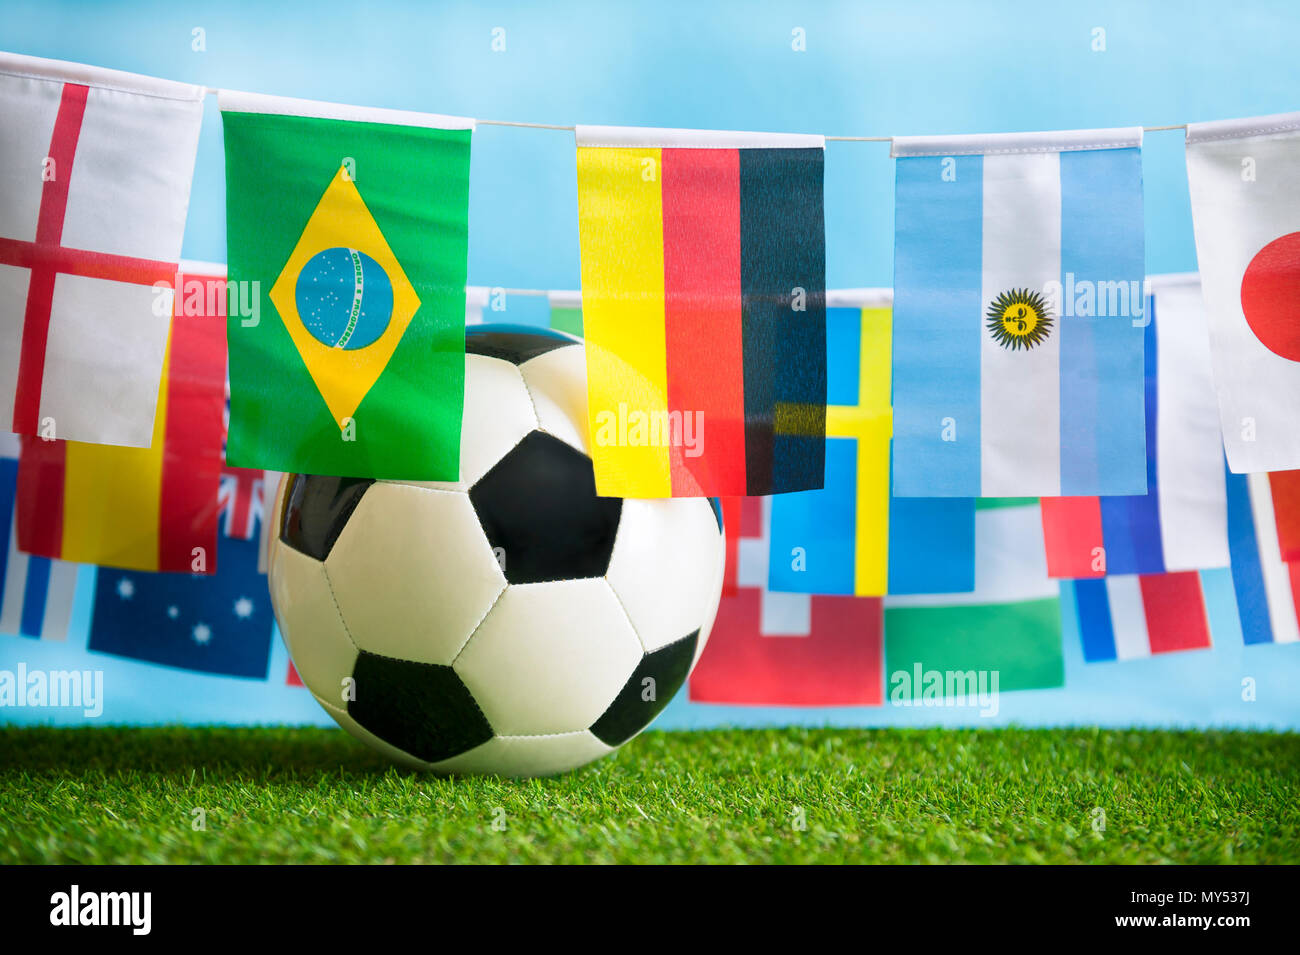 International world flag bunting hanging in celebration around a football sitting on grass Stock Photo